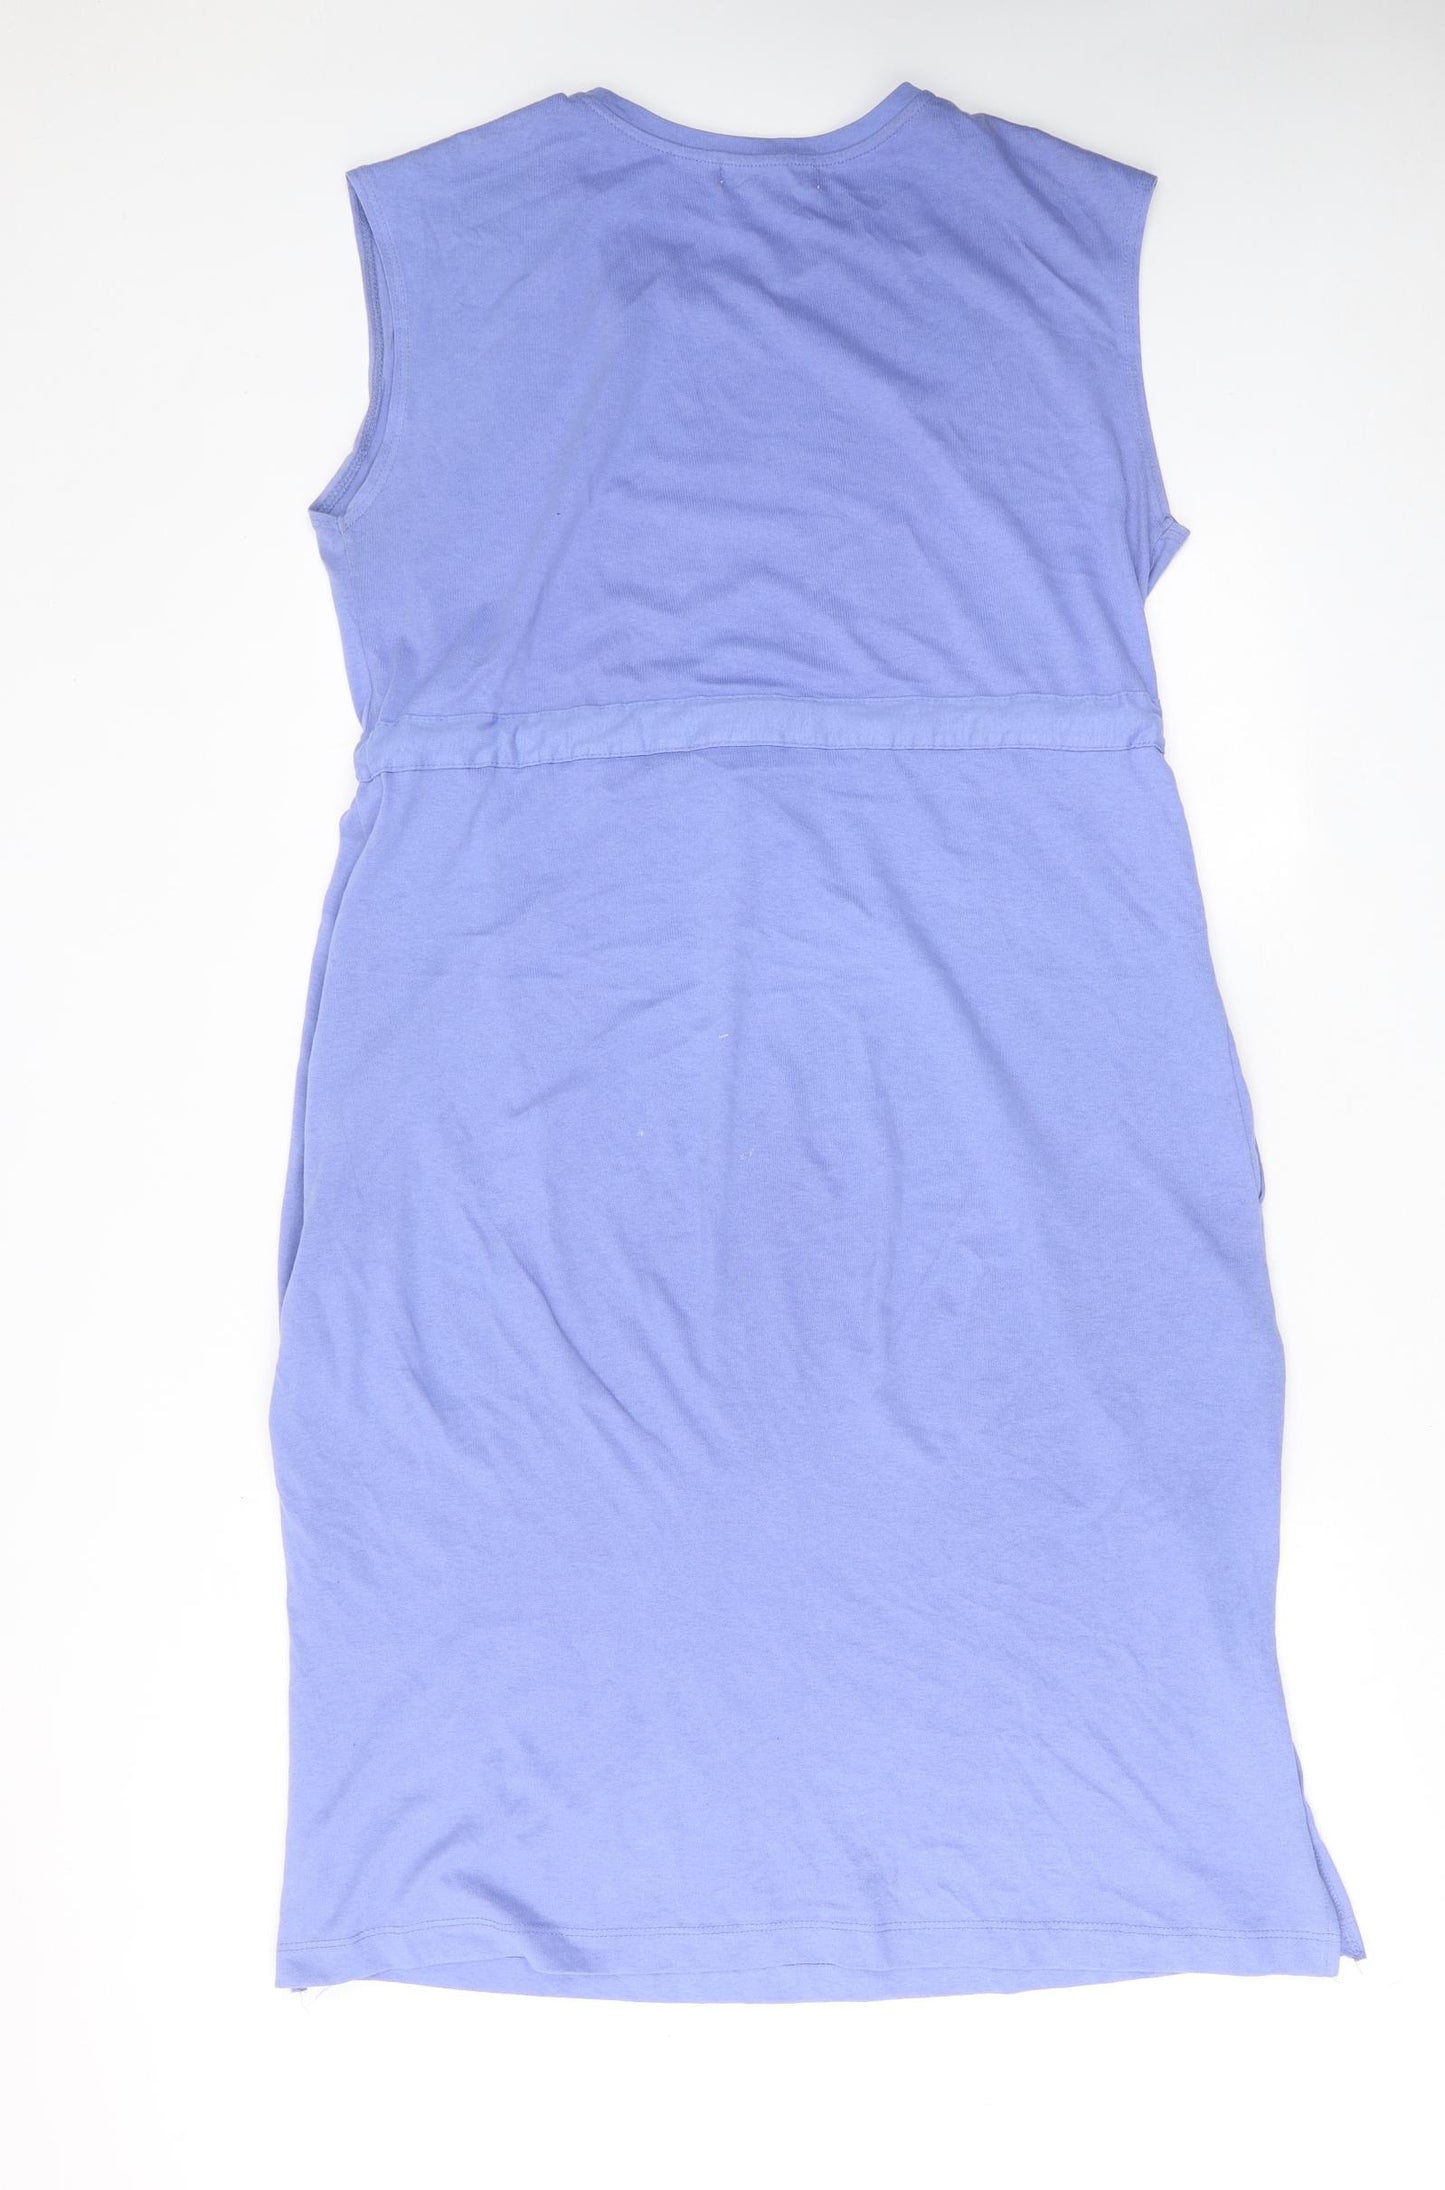 NEXT Womens Purple Cotton T-Shirt Dress Size 14 Crew Neck Pullover